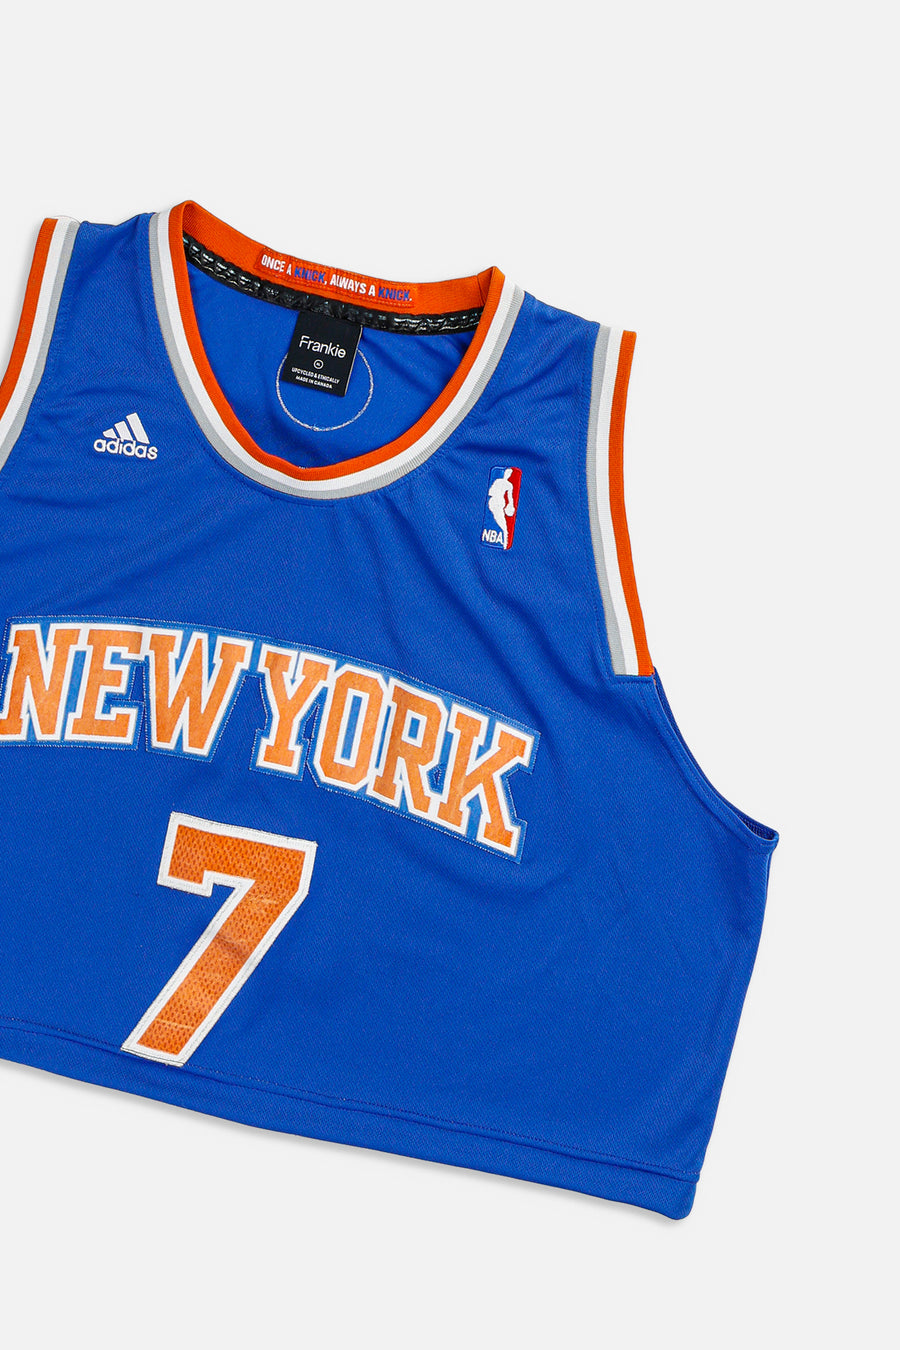 Rework New York Knicks NBA Crop Jersey - S